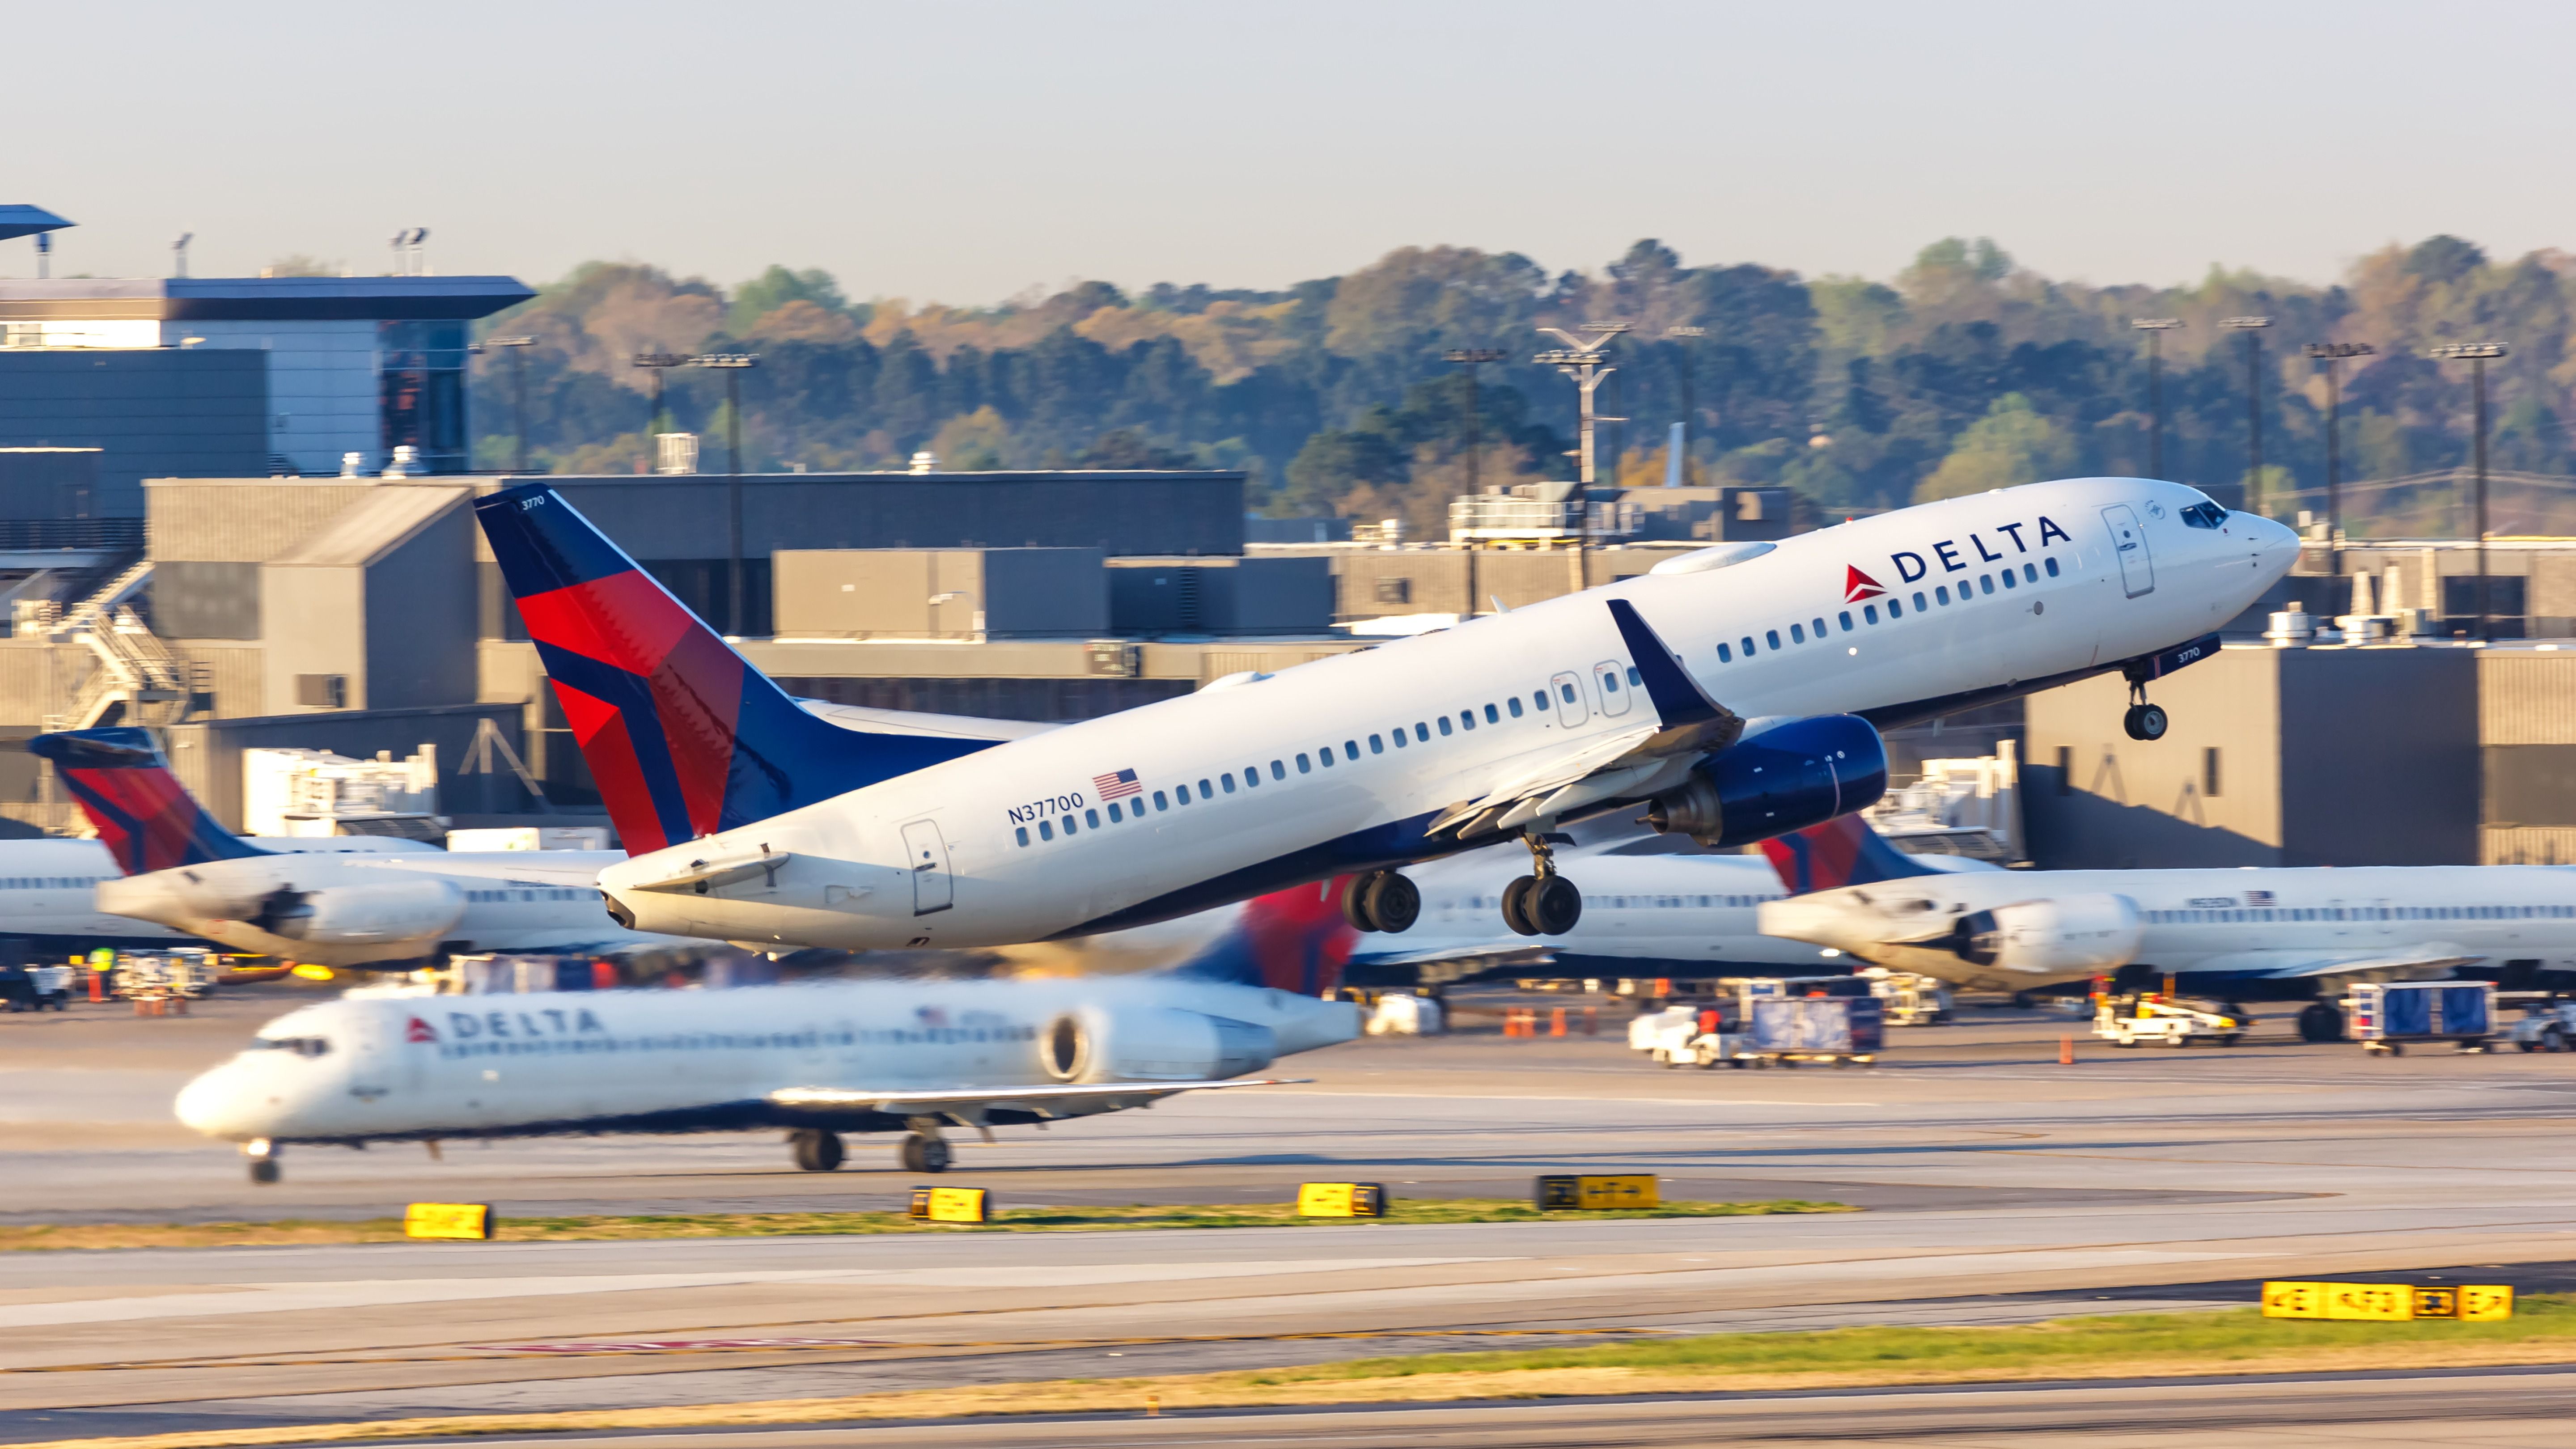 Delta Air Lines Boeing 737-832 taking off from Hartsfield-Jackson Atlanta International Airport.